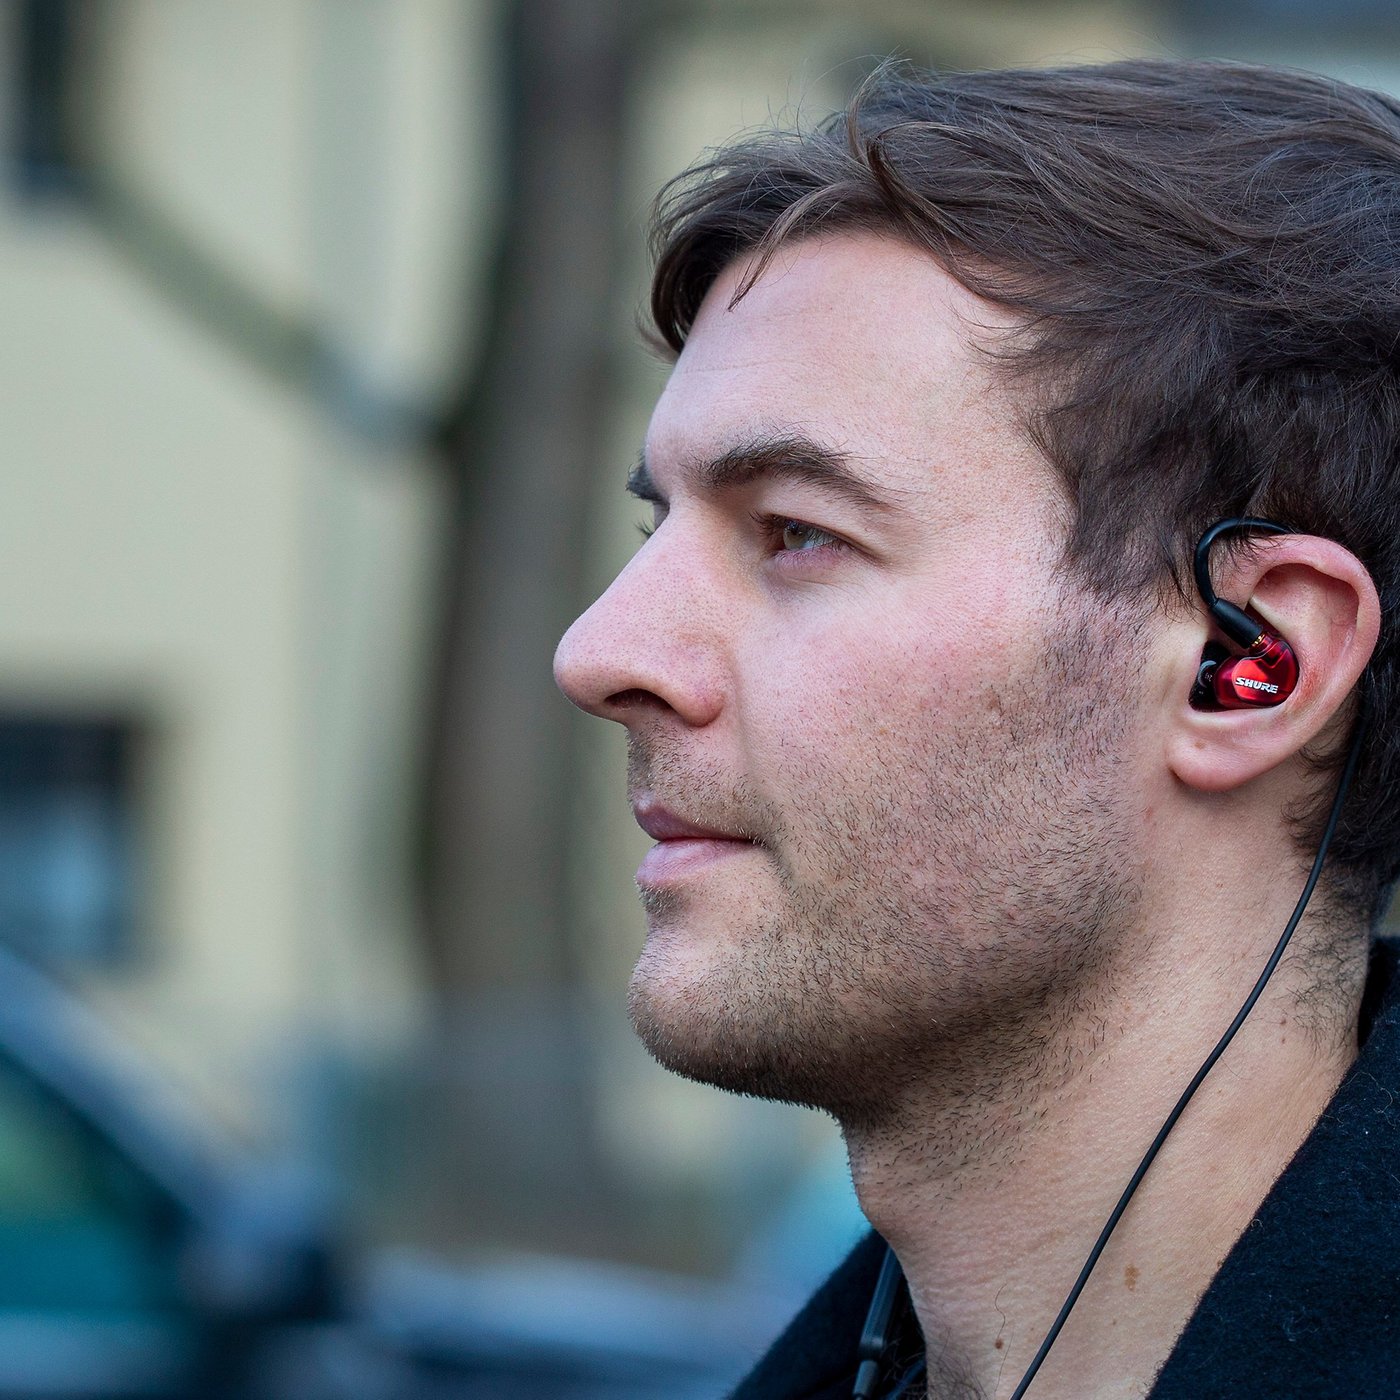 Shure SE review: the best in ear headphones money can buy